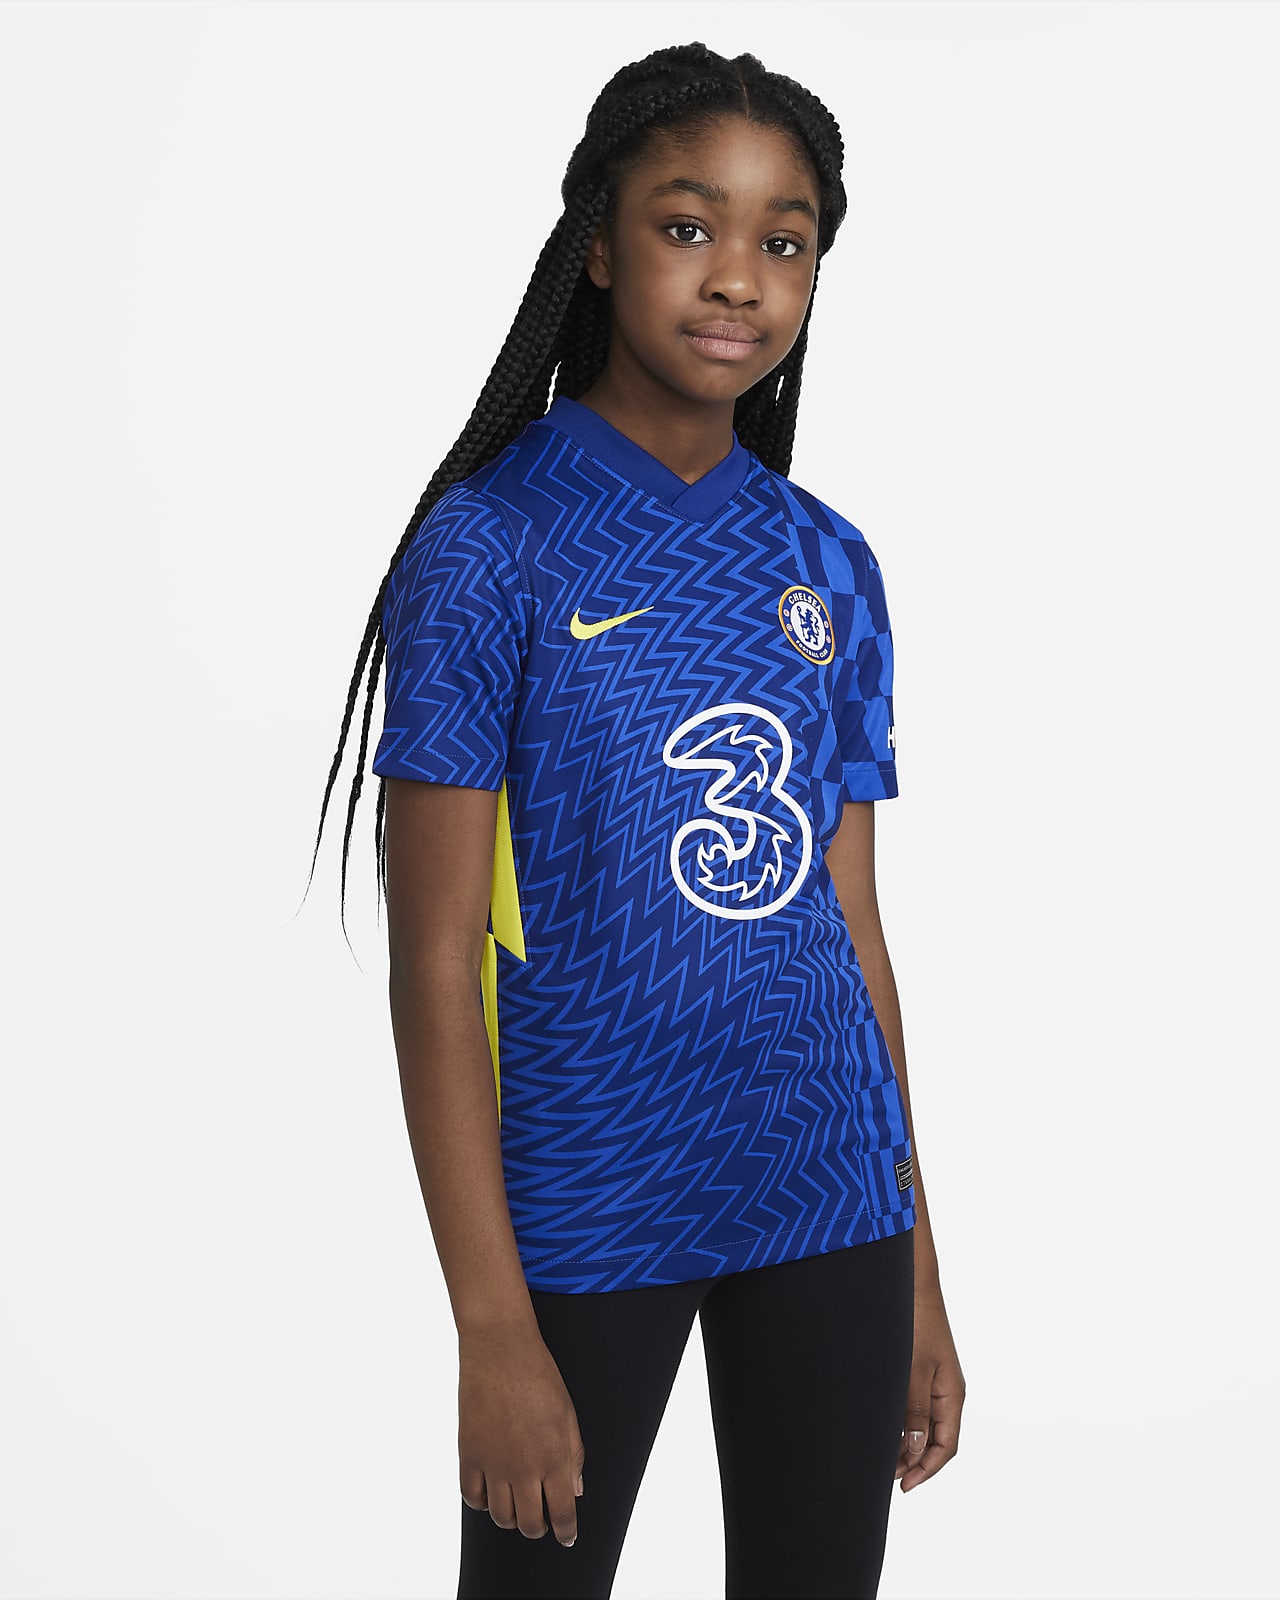 Primera equipación Stadium Chelsea 2021/22 Camiseta de fútbol - Niño/a. Nike